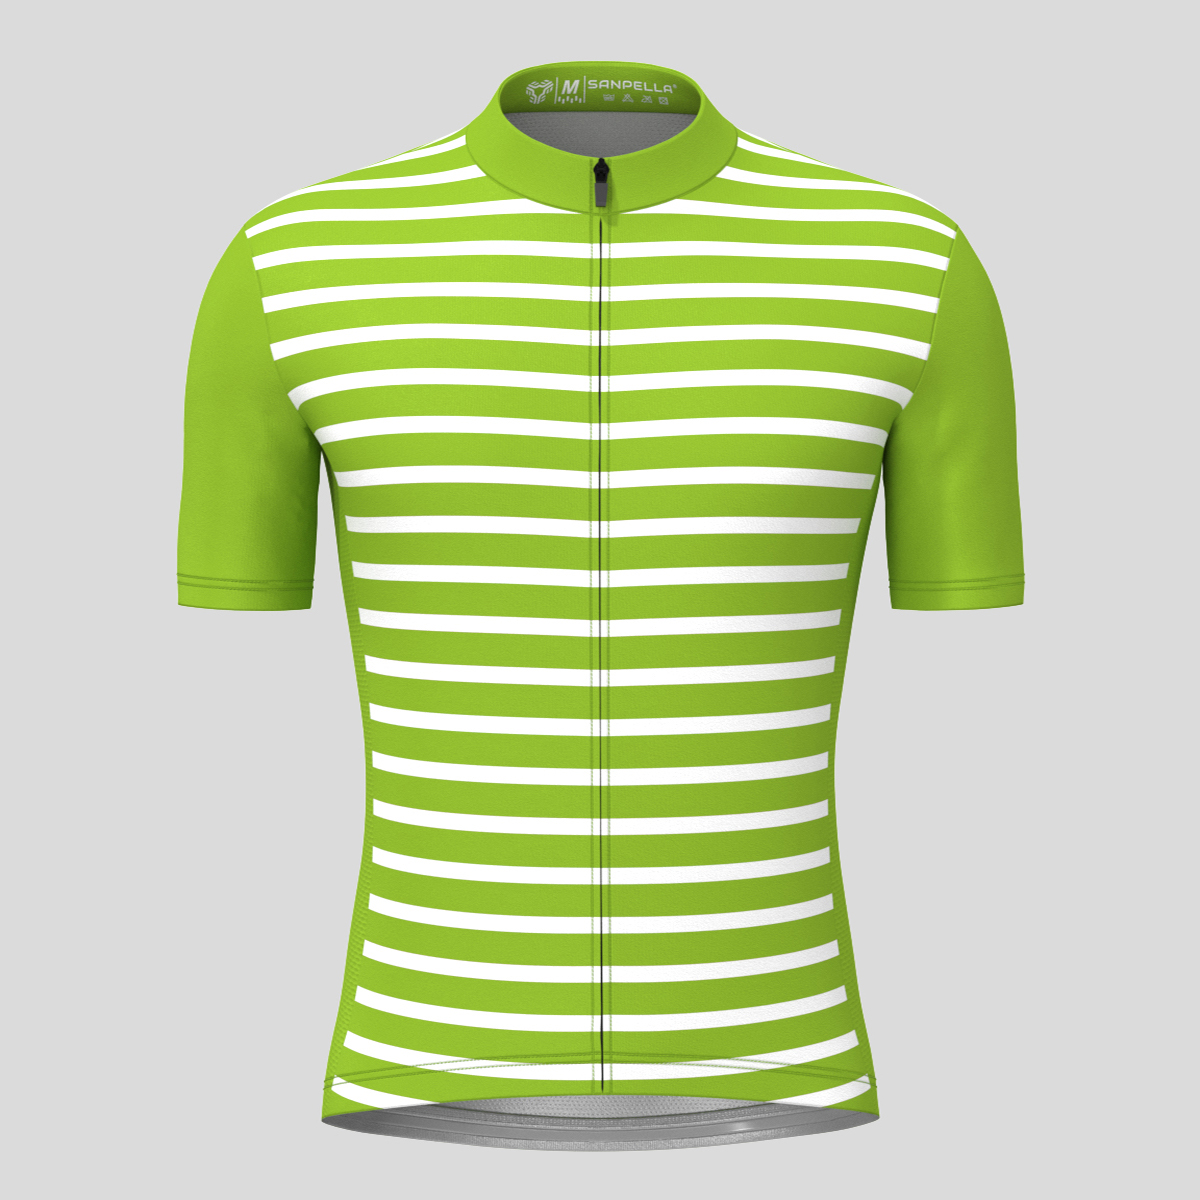 Minimal Stripes Men's Cycling Jersey - Wasabi